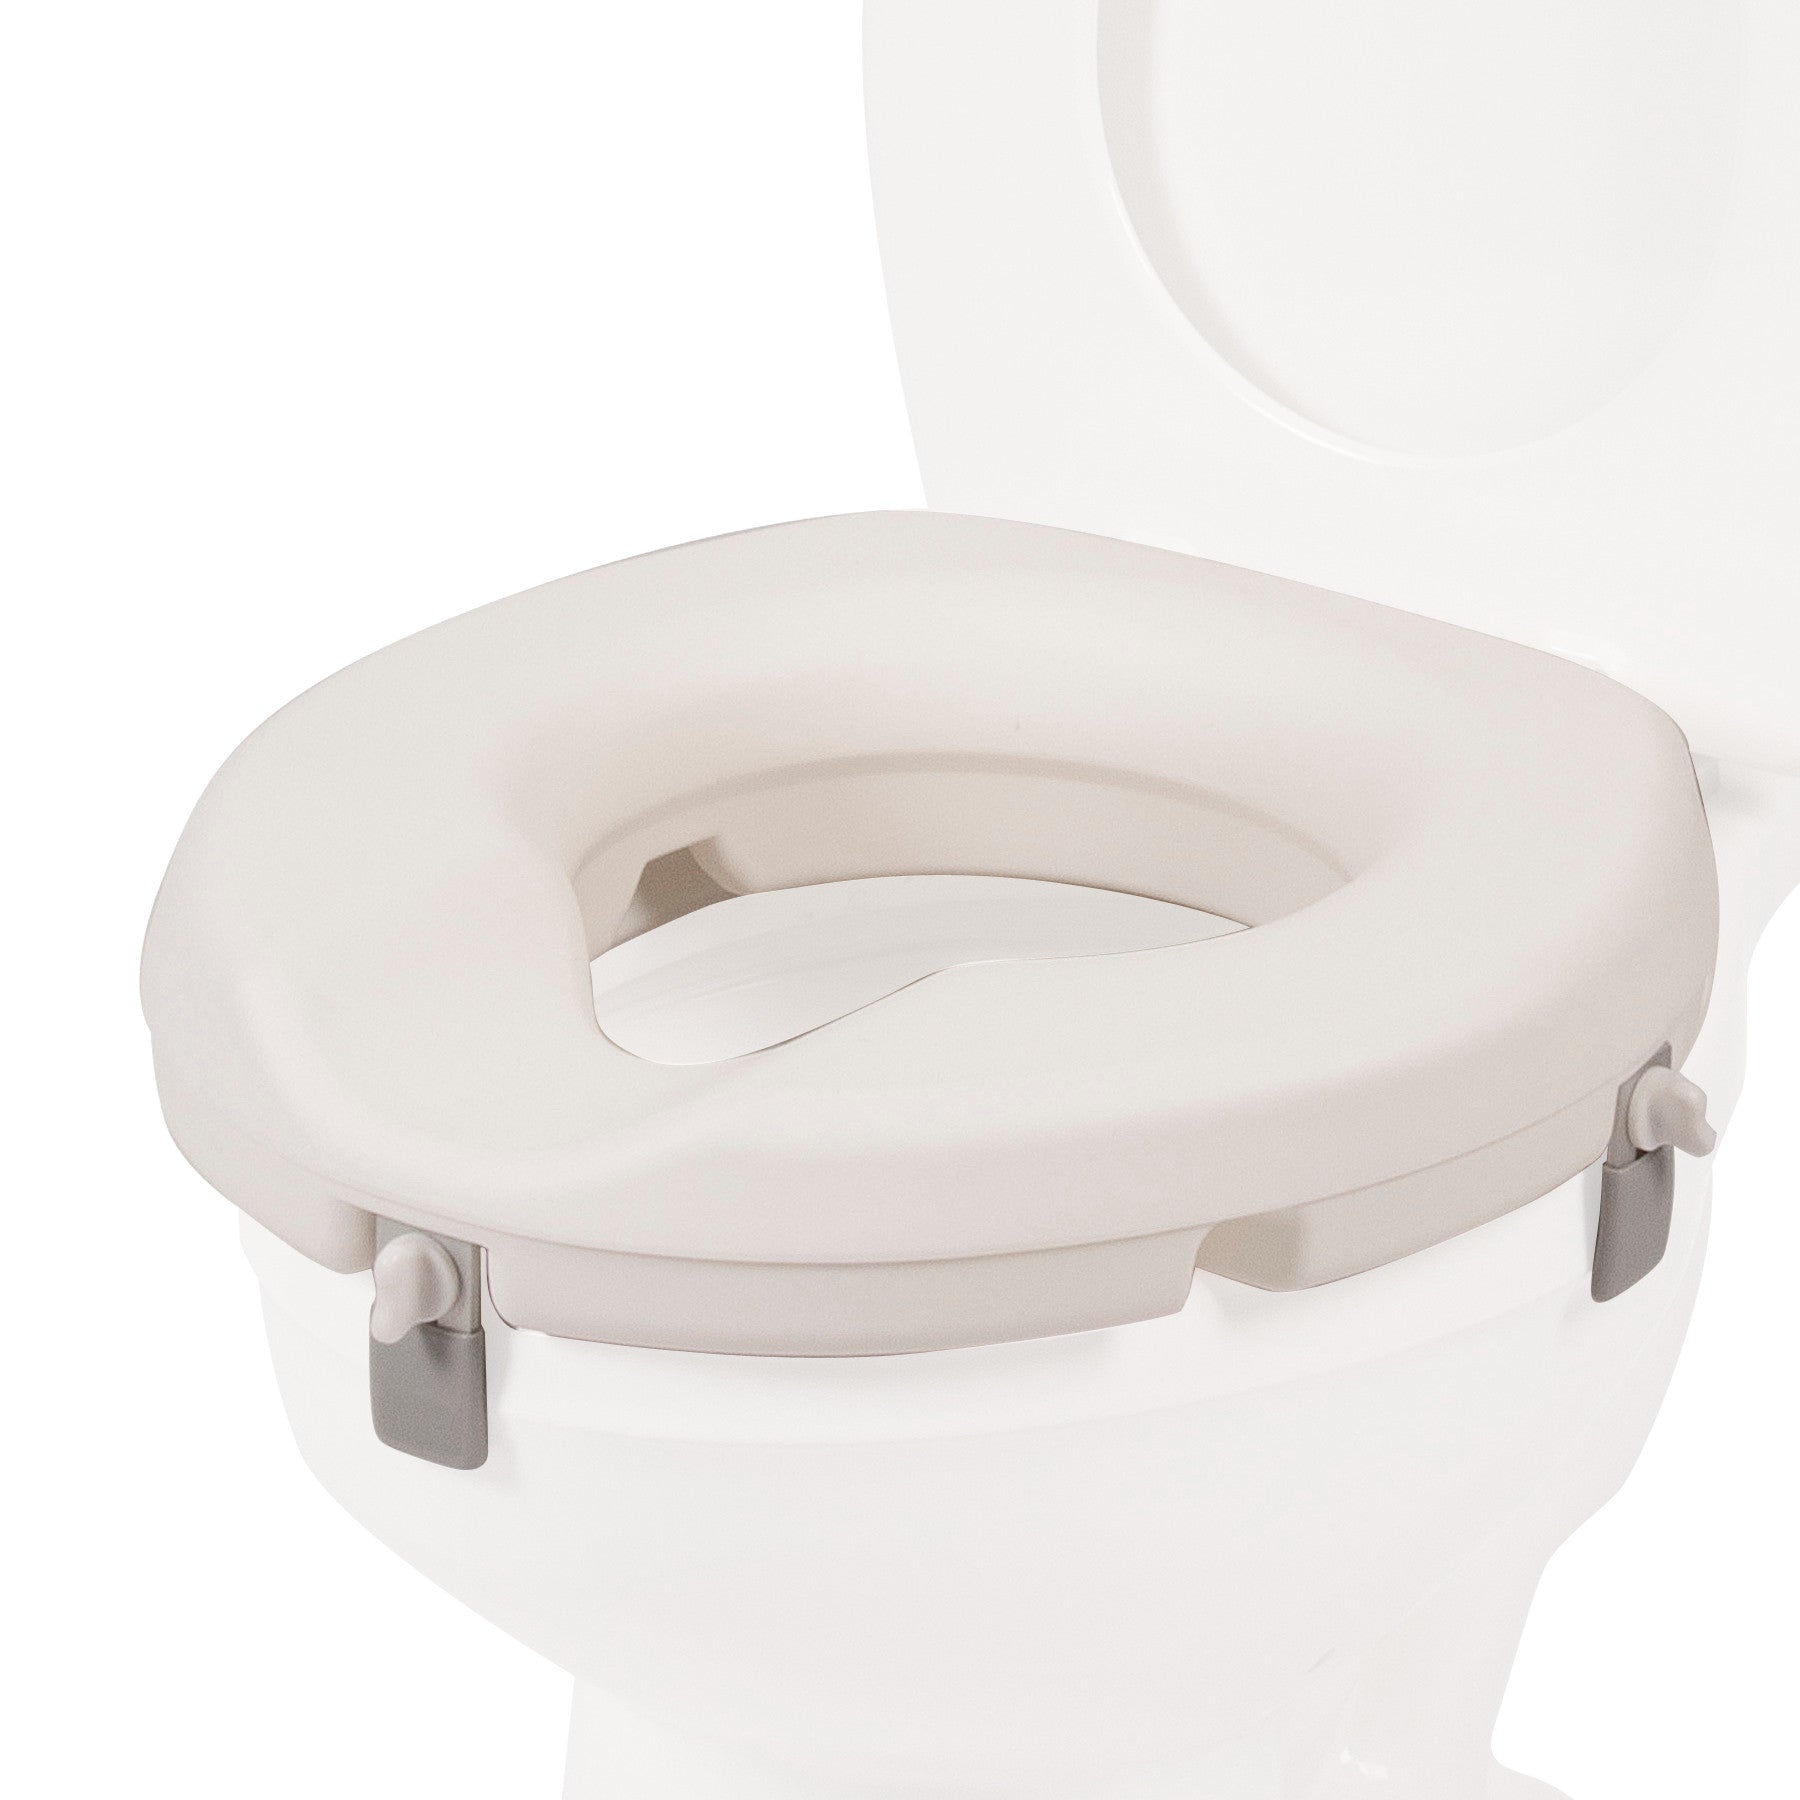 7019 3 Universal Raised Toilet Seat